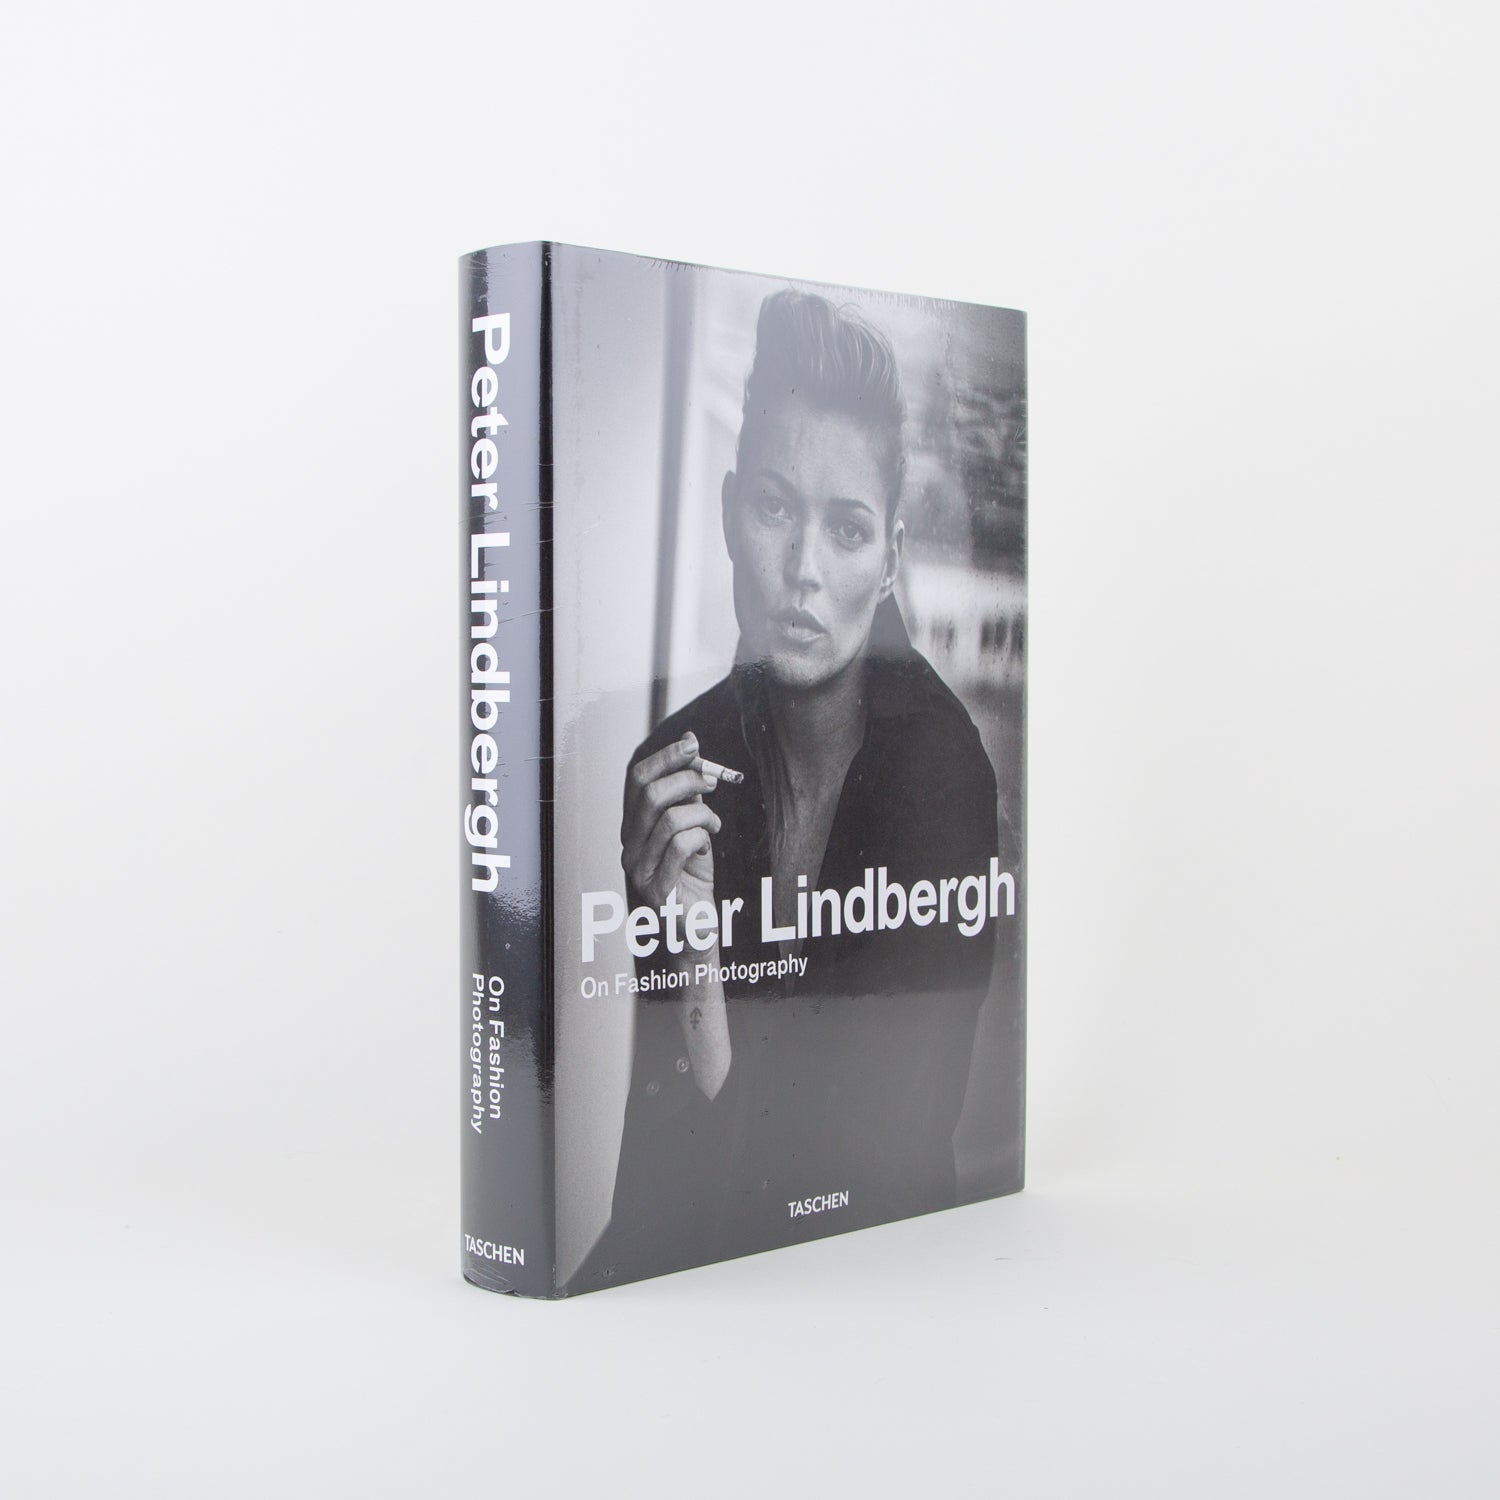 secret-location-concept-store-taschen-book-peter-lindbergh